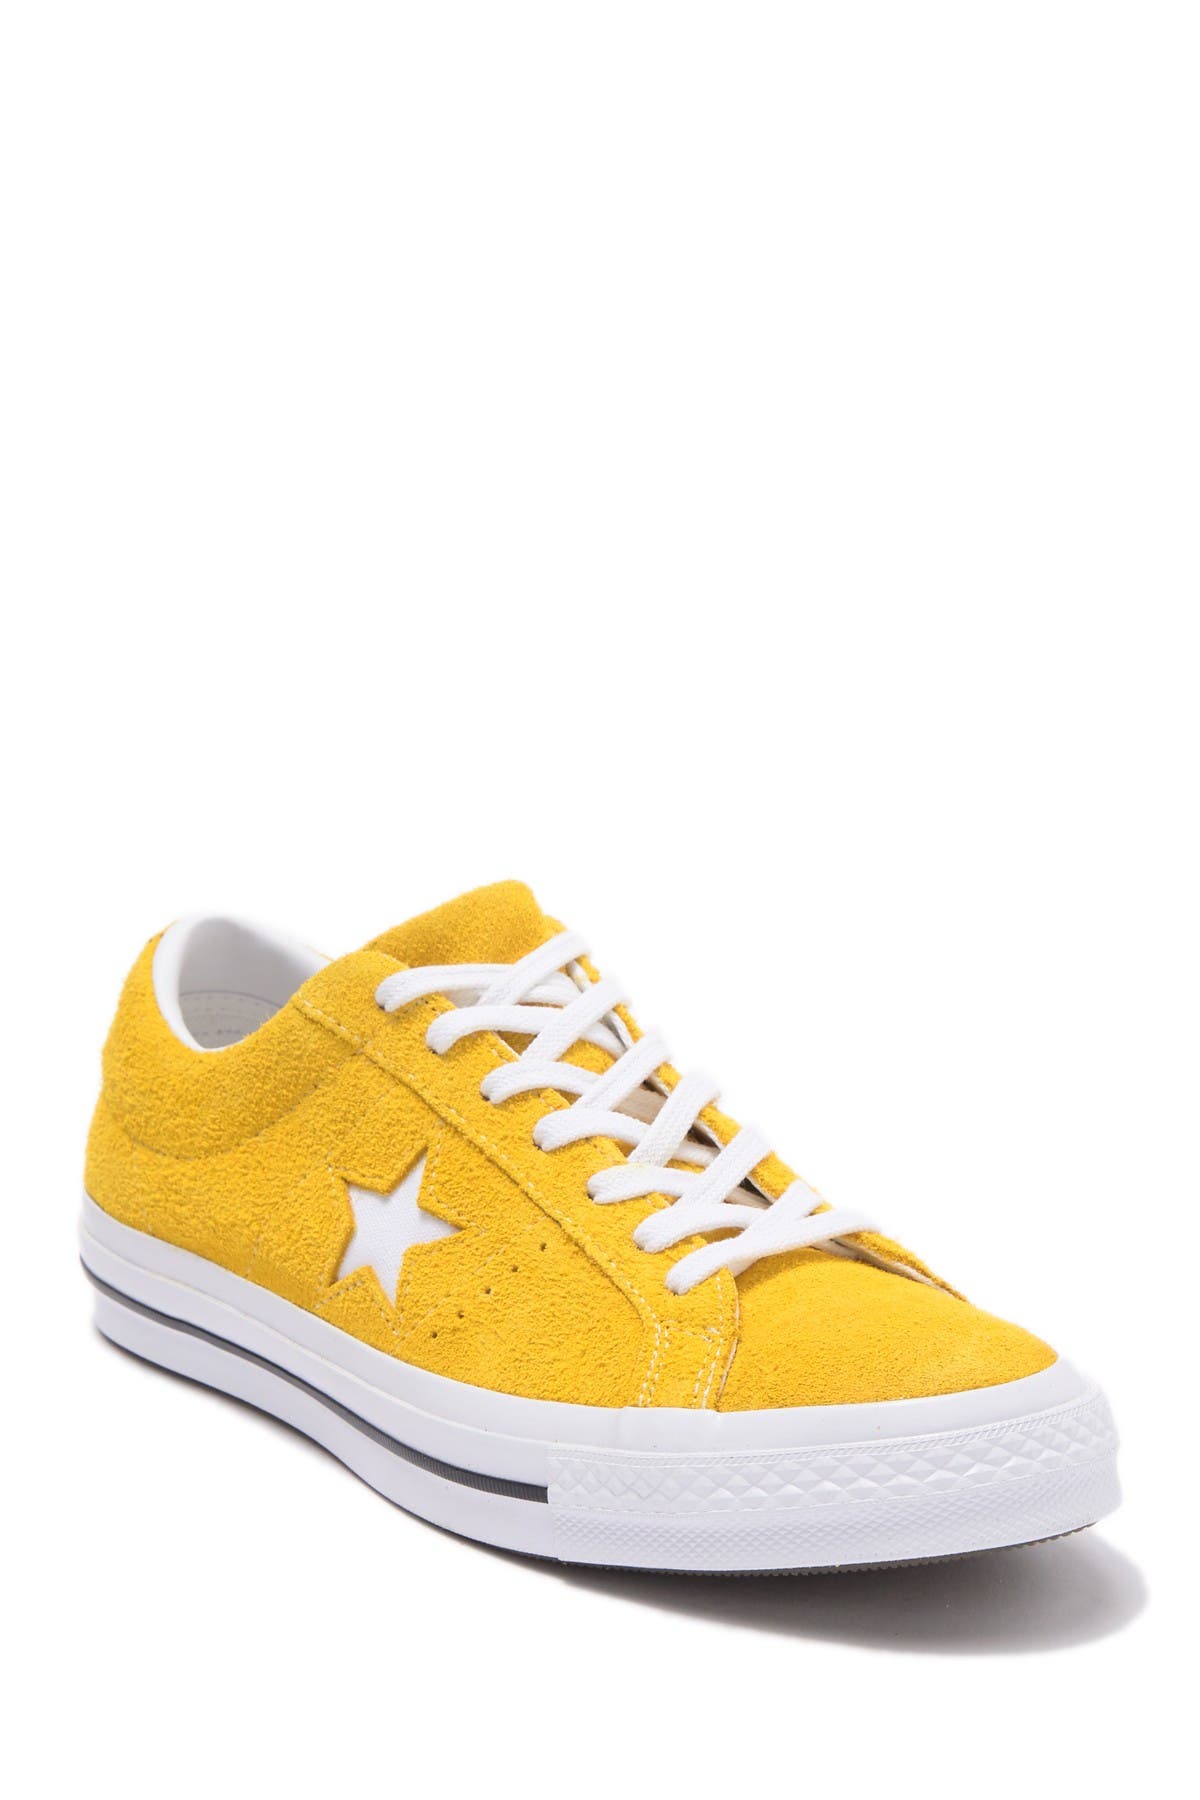 converse star yellow